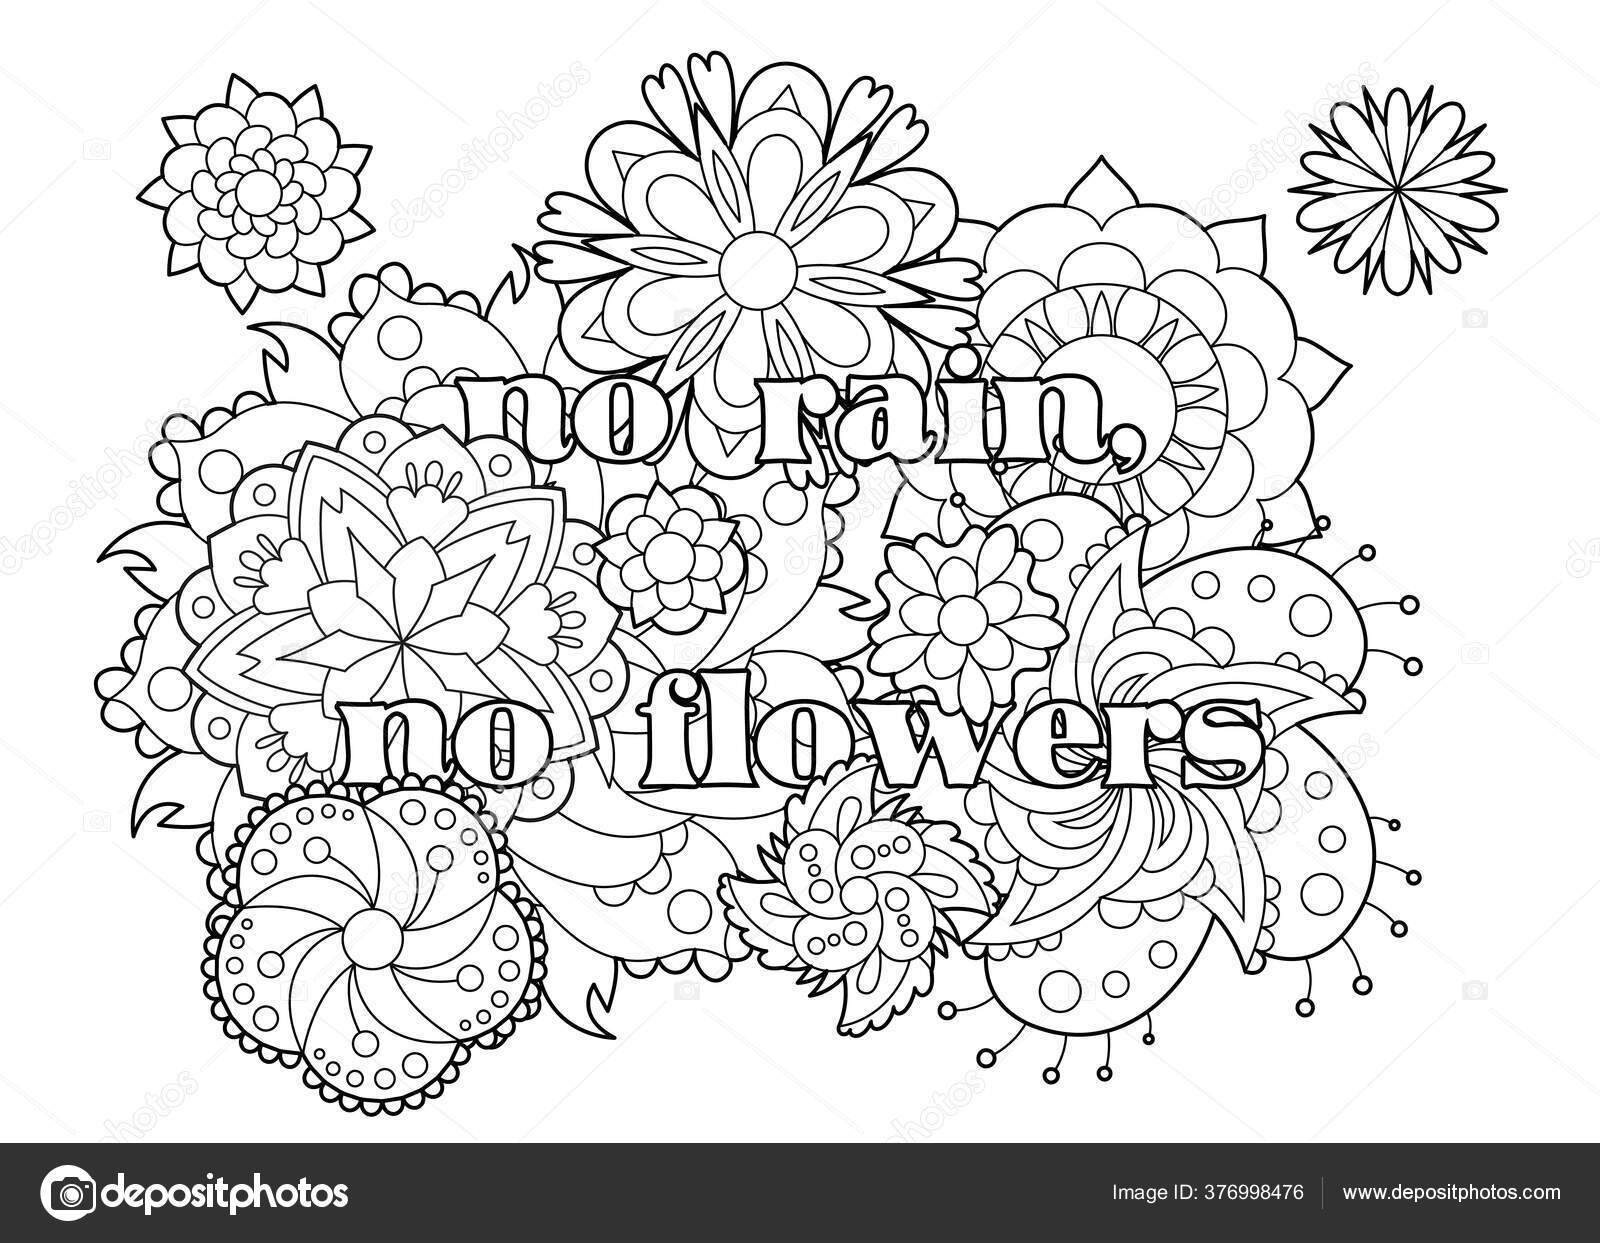 Vector Coloring Book Adults Inspirational Quote Mandala Flowers Zentangle  Style Stock Vector by ©Lezhepyoka 378145736